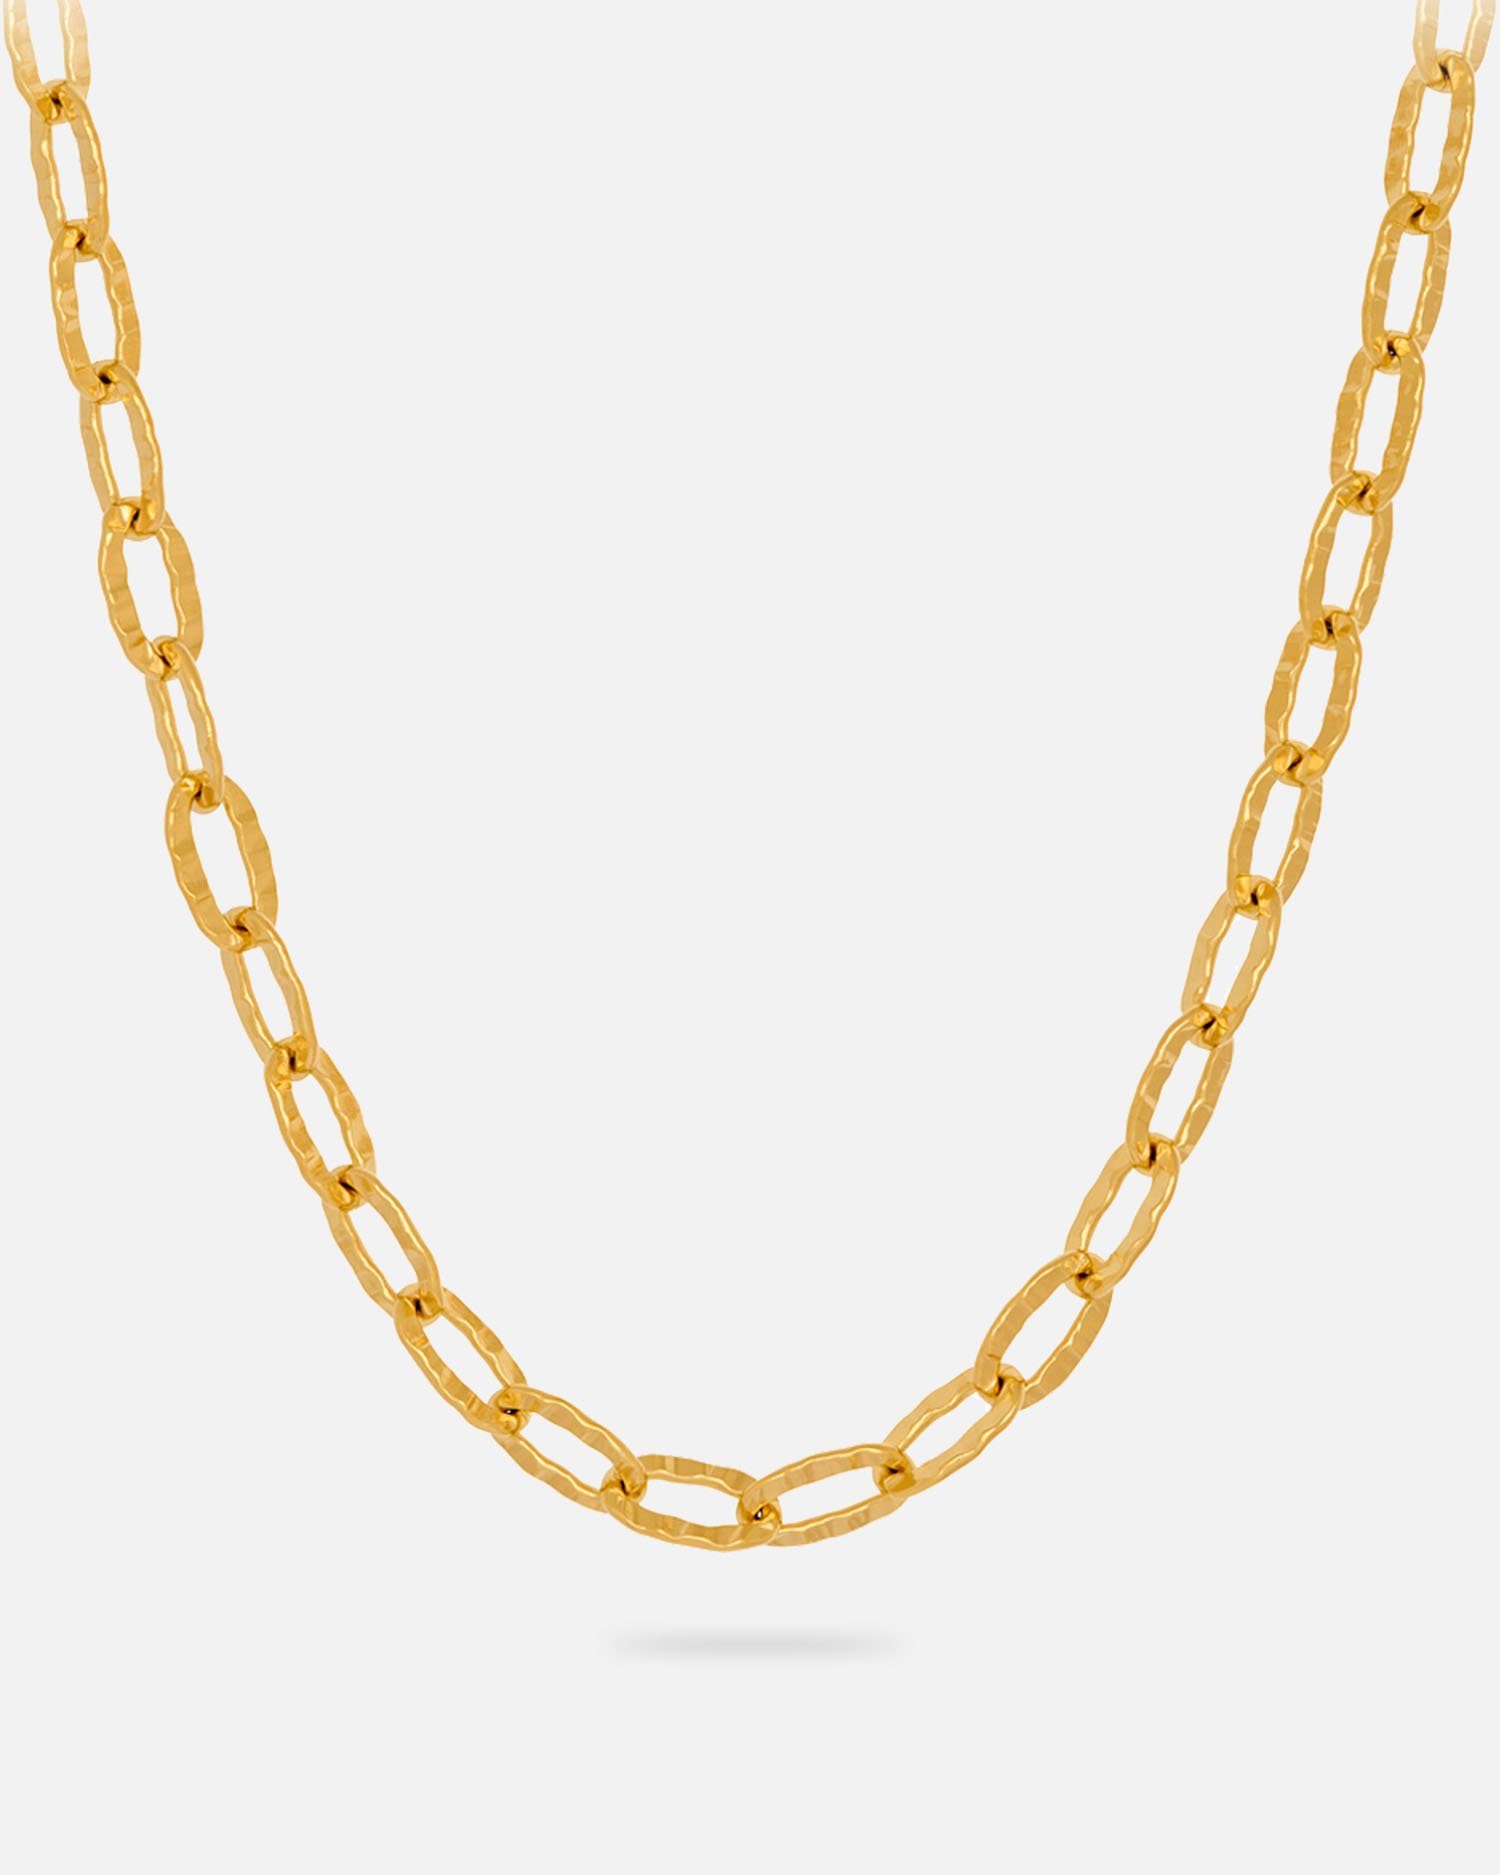 Ines Damen Vergoldet, Karat Halskette Kette Anhänger Corydon ohne Silber Pernille vergoldet 925, 18 Kette